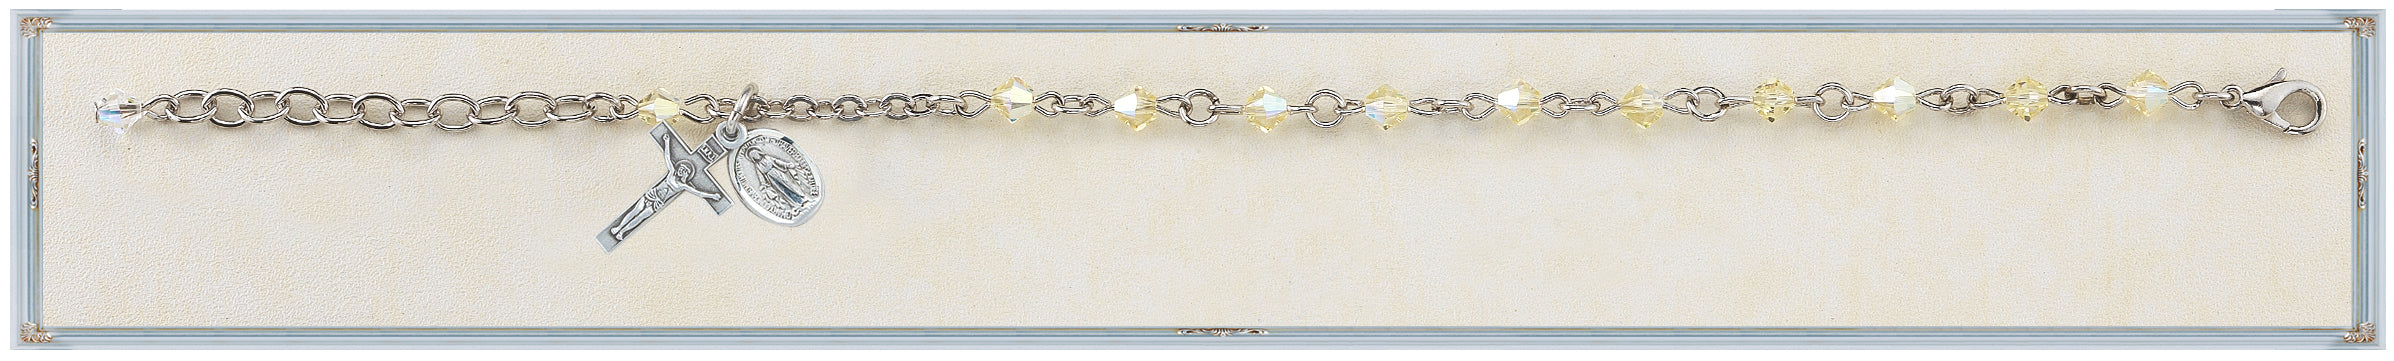 4mm Jonquil Swarovski Crystal Rondell Rosary Bracelet